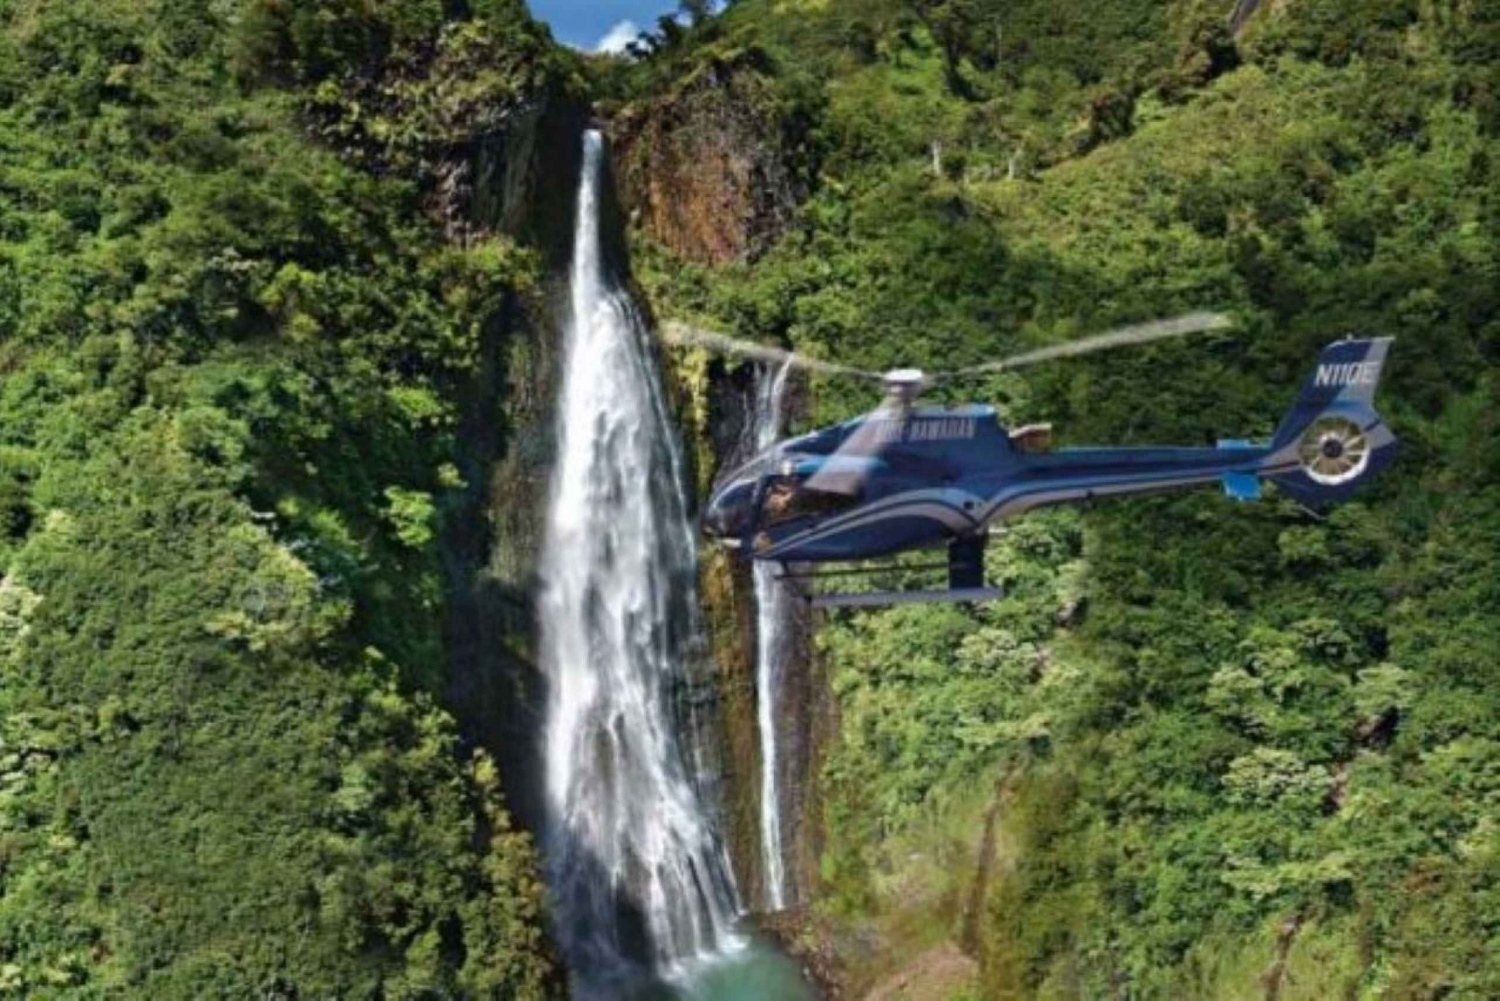 Da Oahu: Kauai Helicopter and Ground Tour